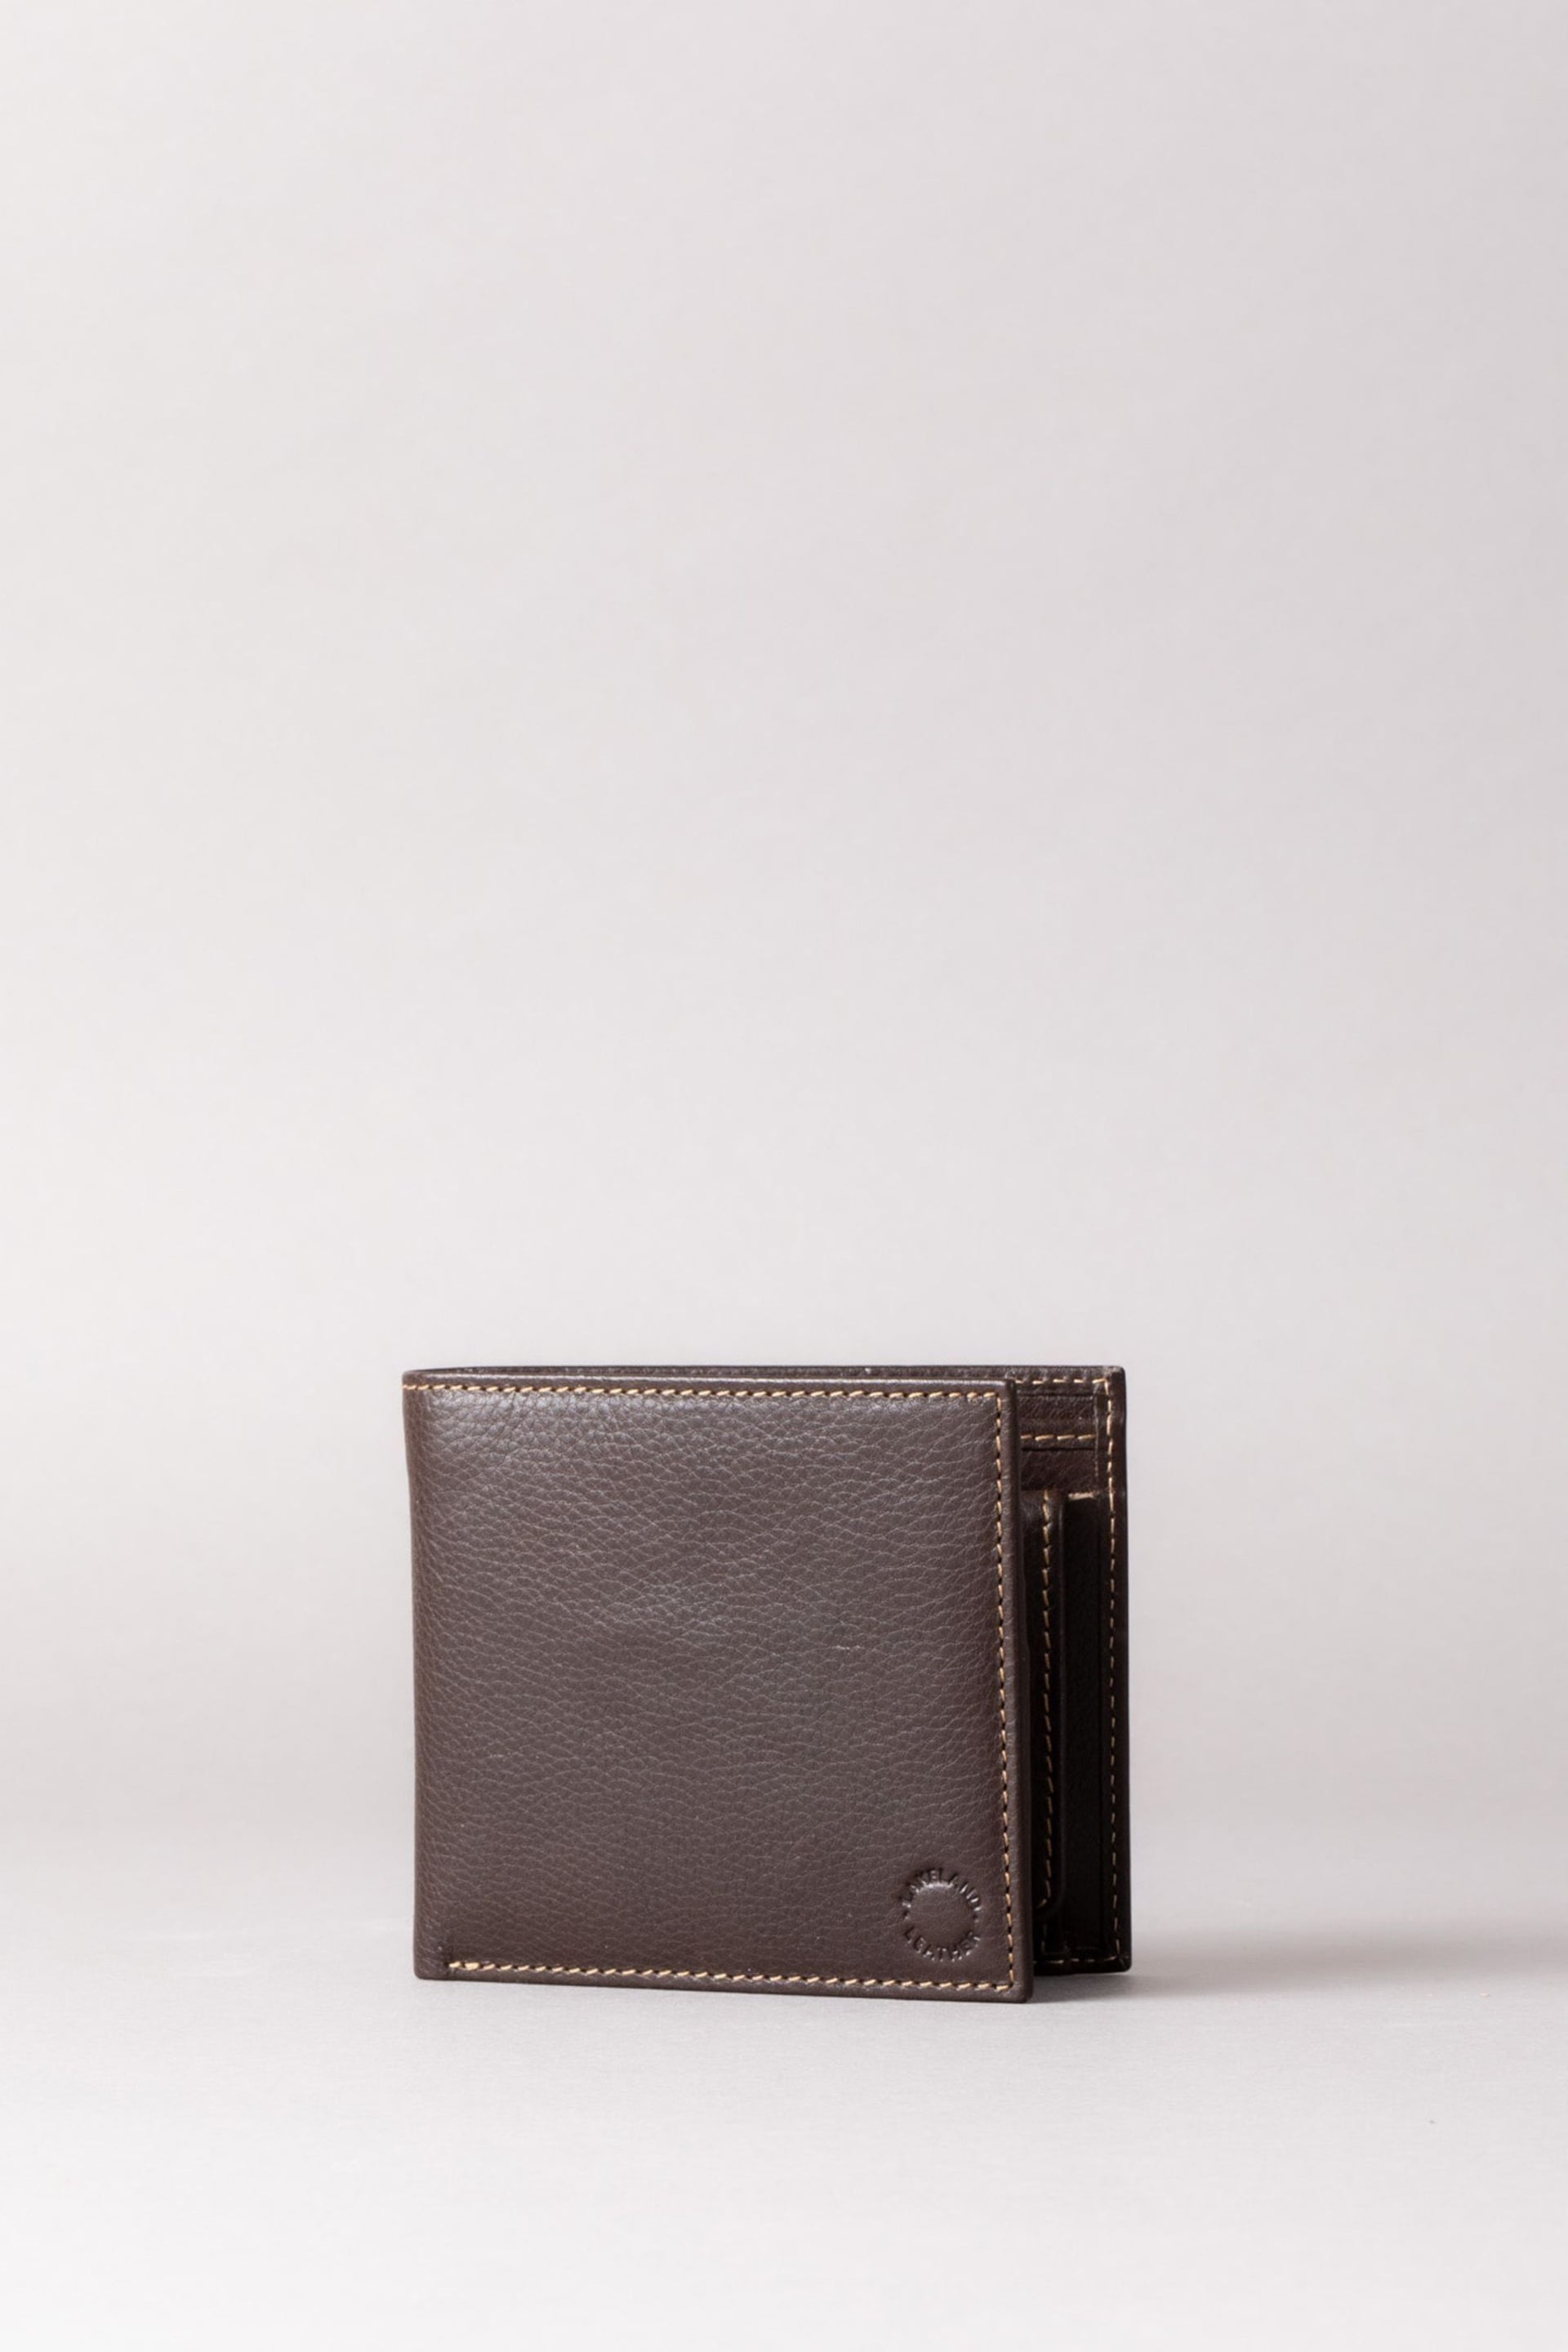 Lakeland Leather Kelsick Leather Brown Wallet - Image 1 of 7